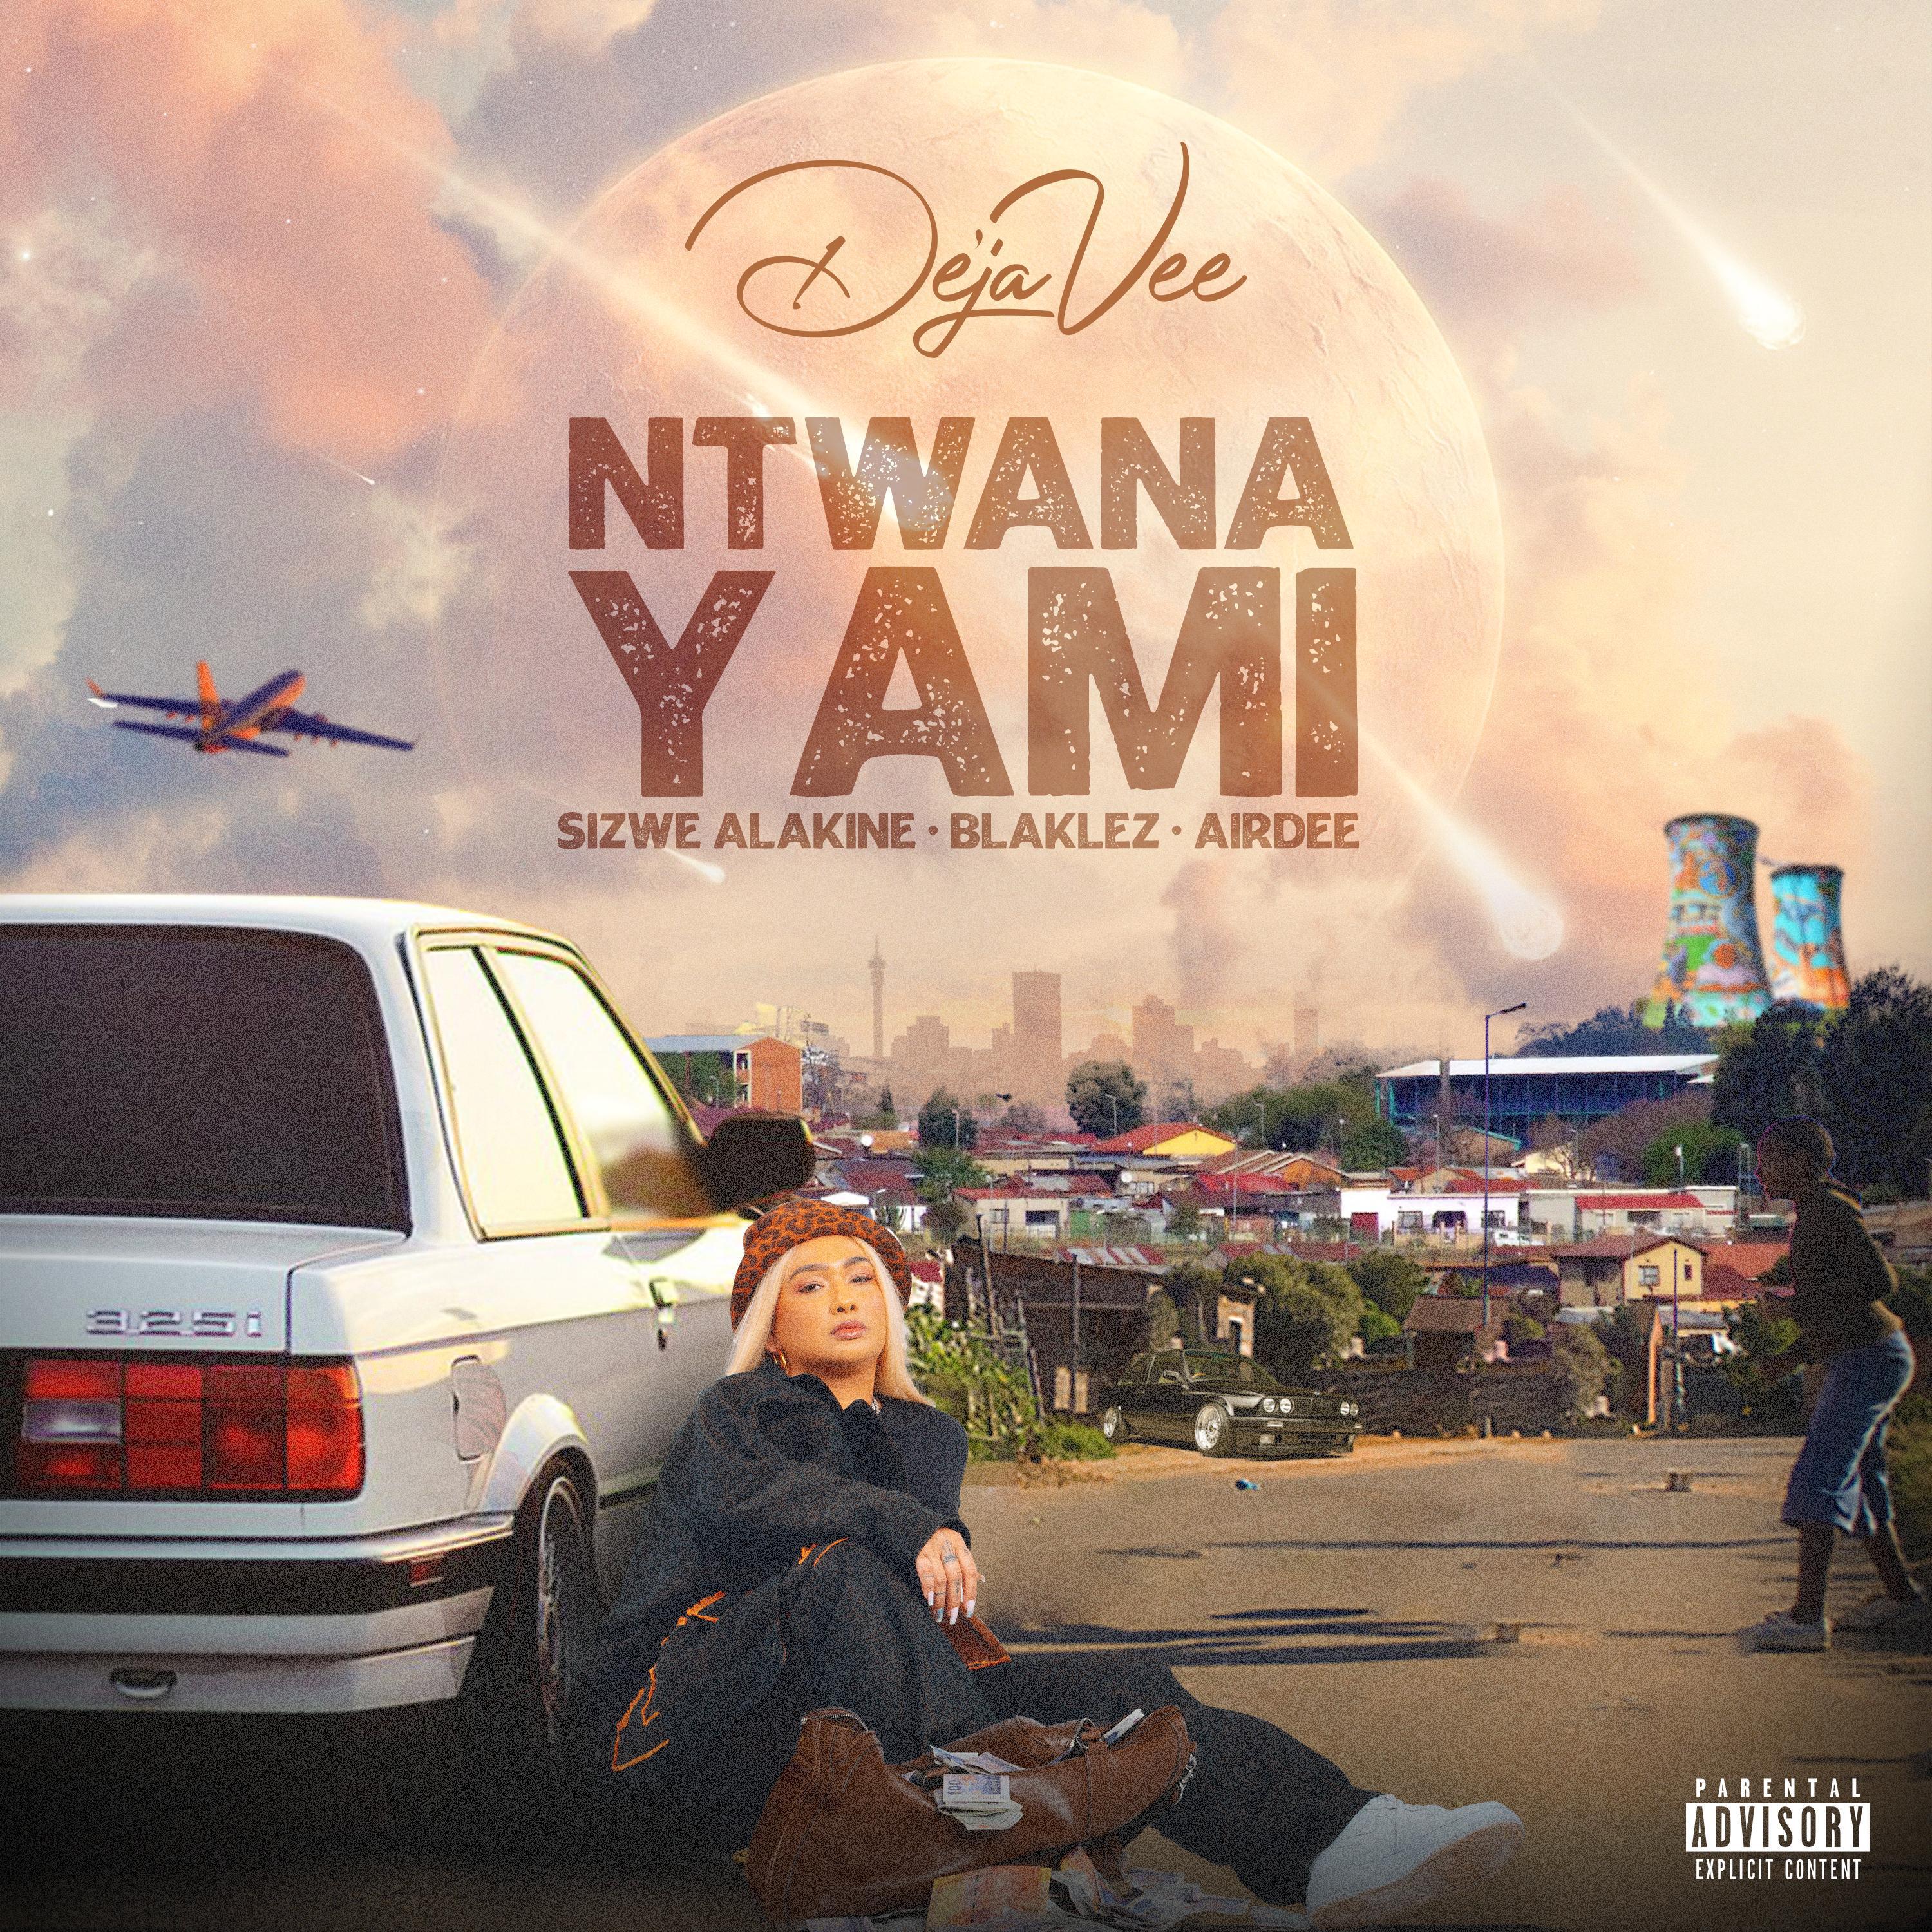 DeJaVee - Ntwana Yami (feat. Sizwe Alakine, Blaklez & Airdee) (Radio Edit)